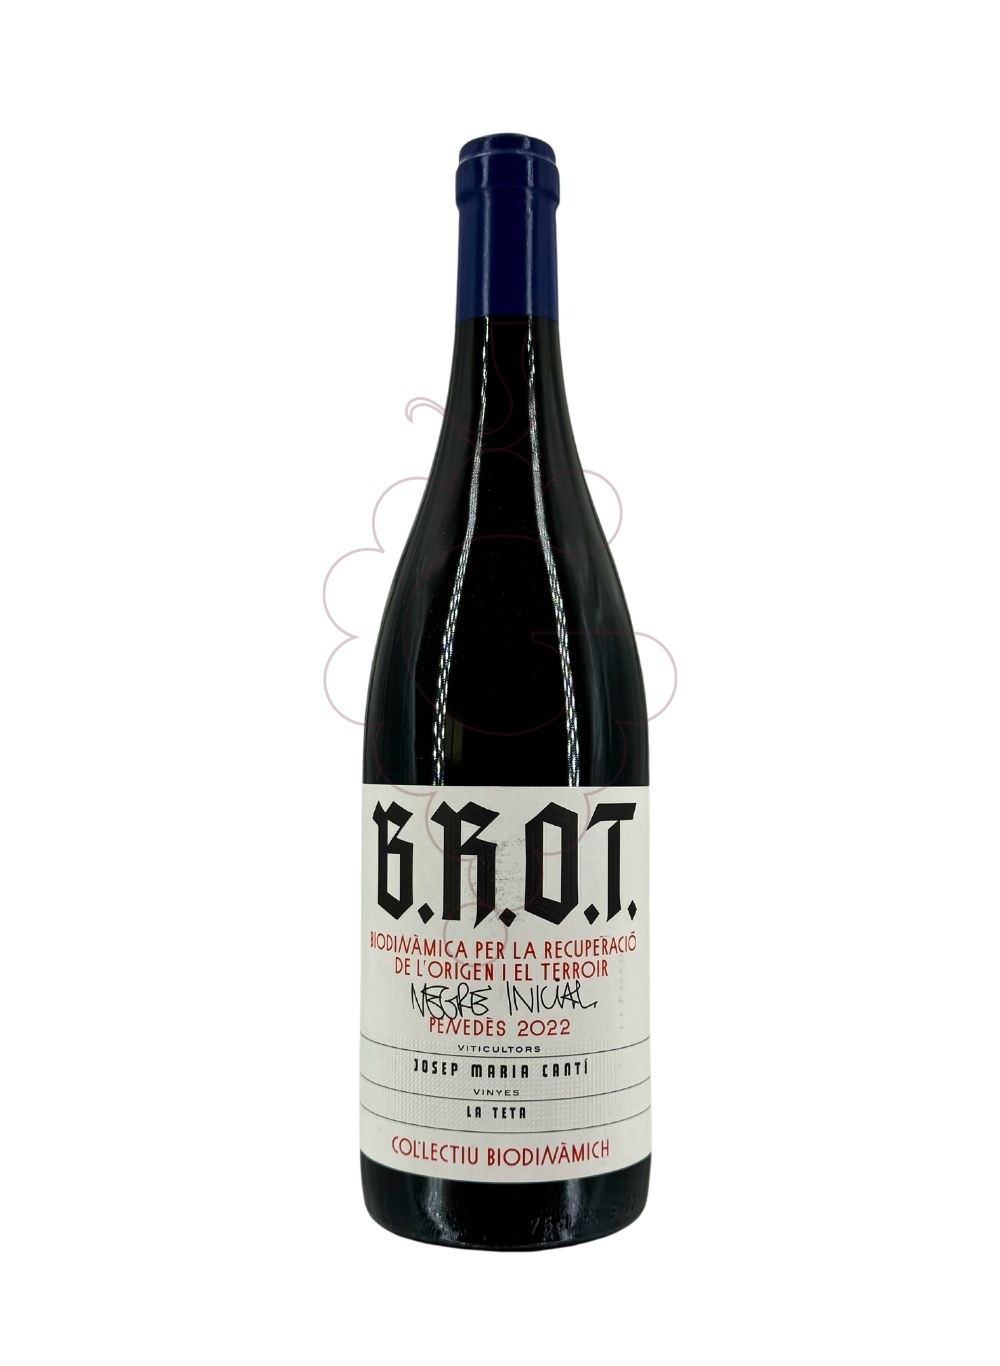 Foto B.R.O.T. Negre Inicial vino tinto